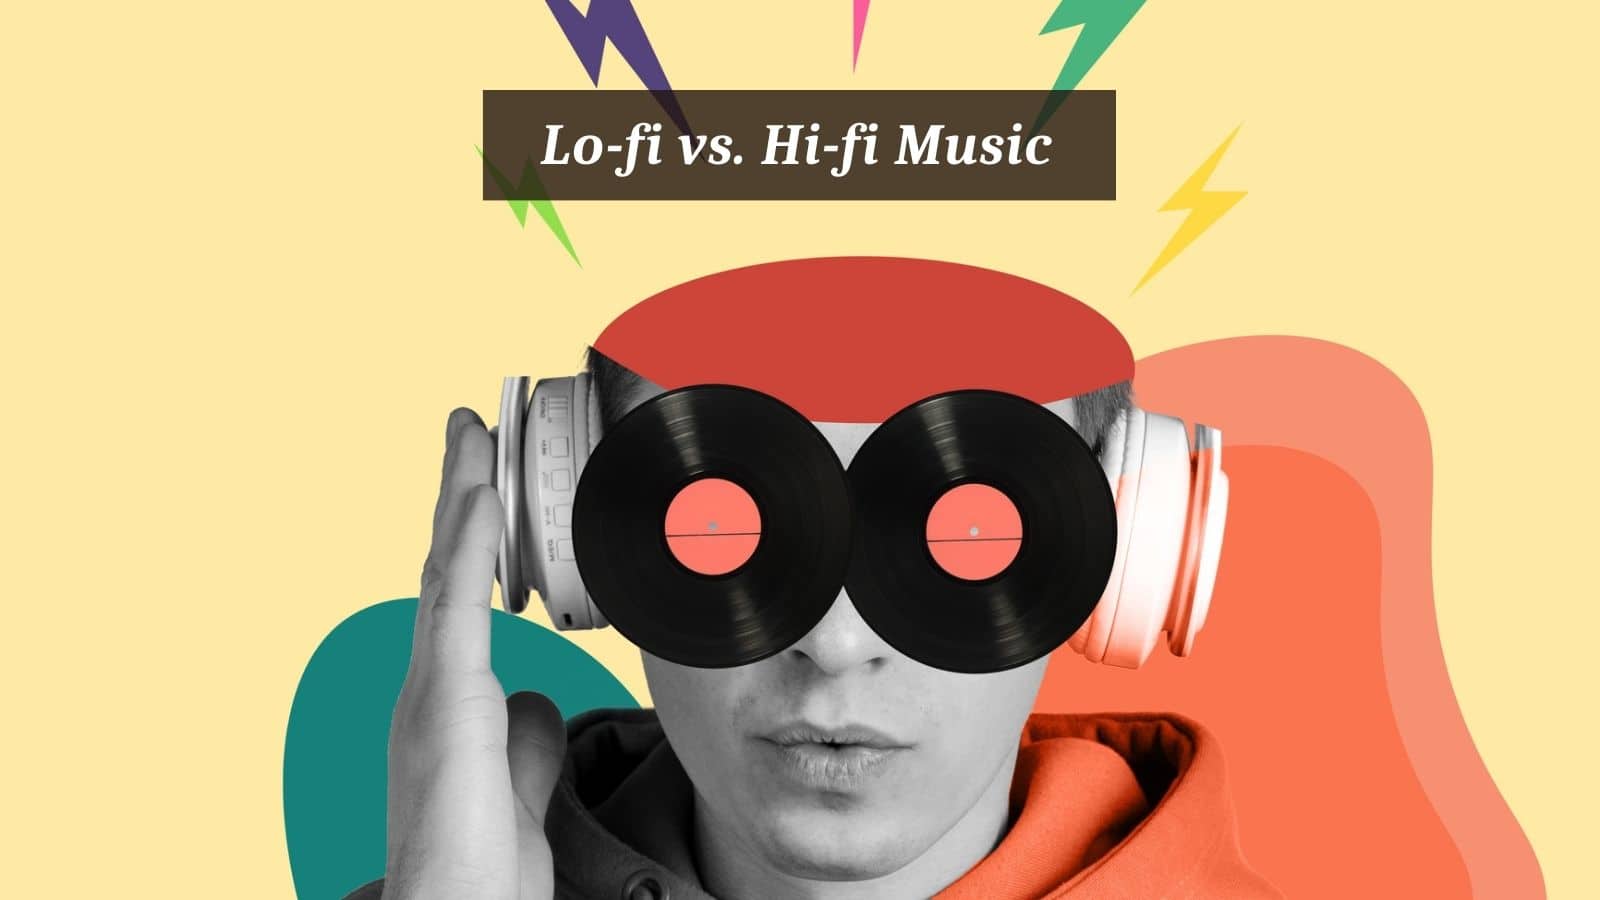 Lo-fi vs Hi-fi Music